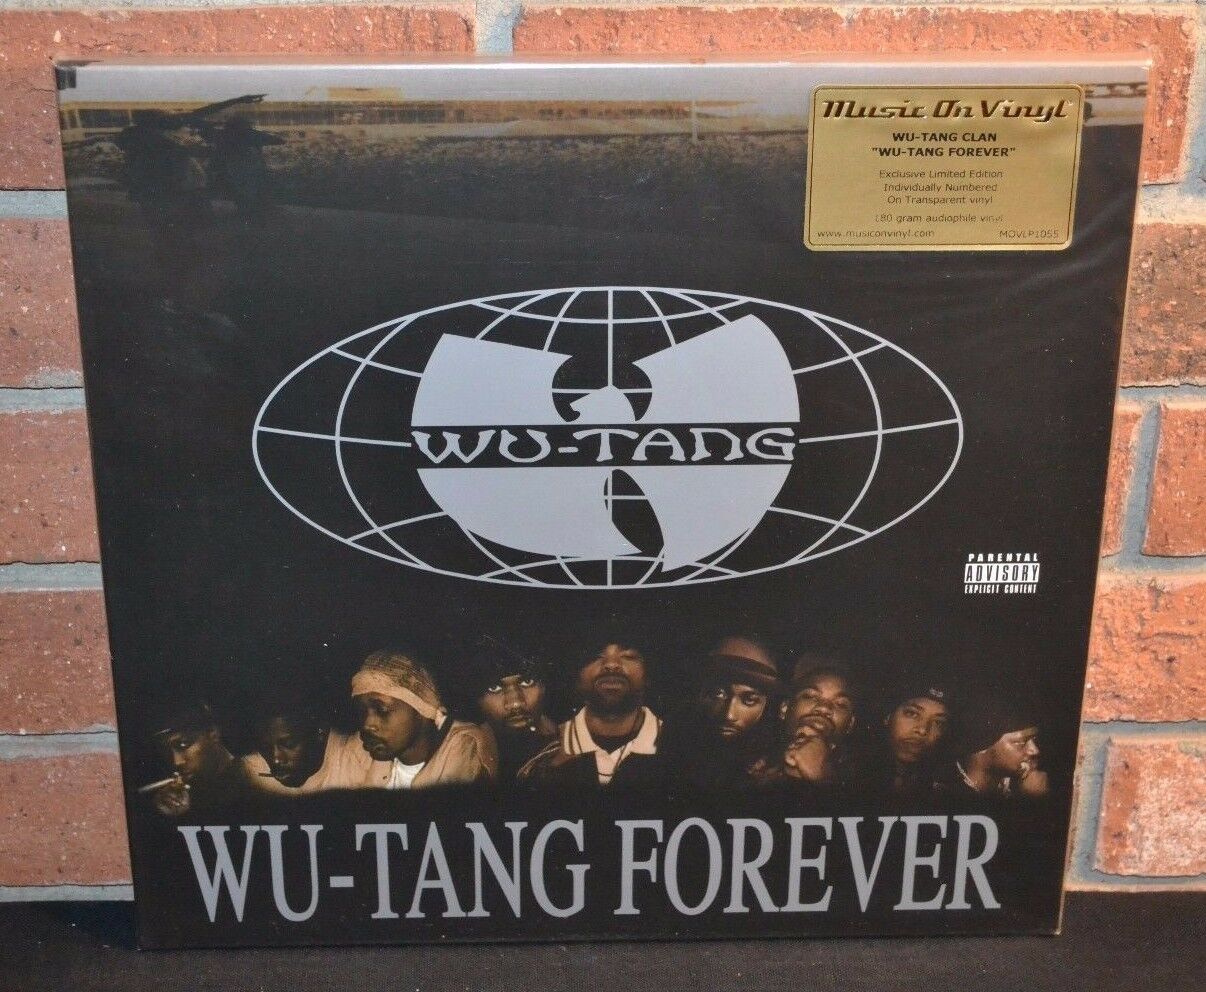 popsike.com - WU-TANG CLAN - Wu-Tang Forever, Ltd 2014 Import 180G